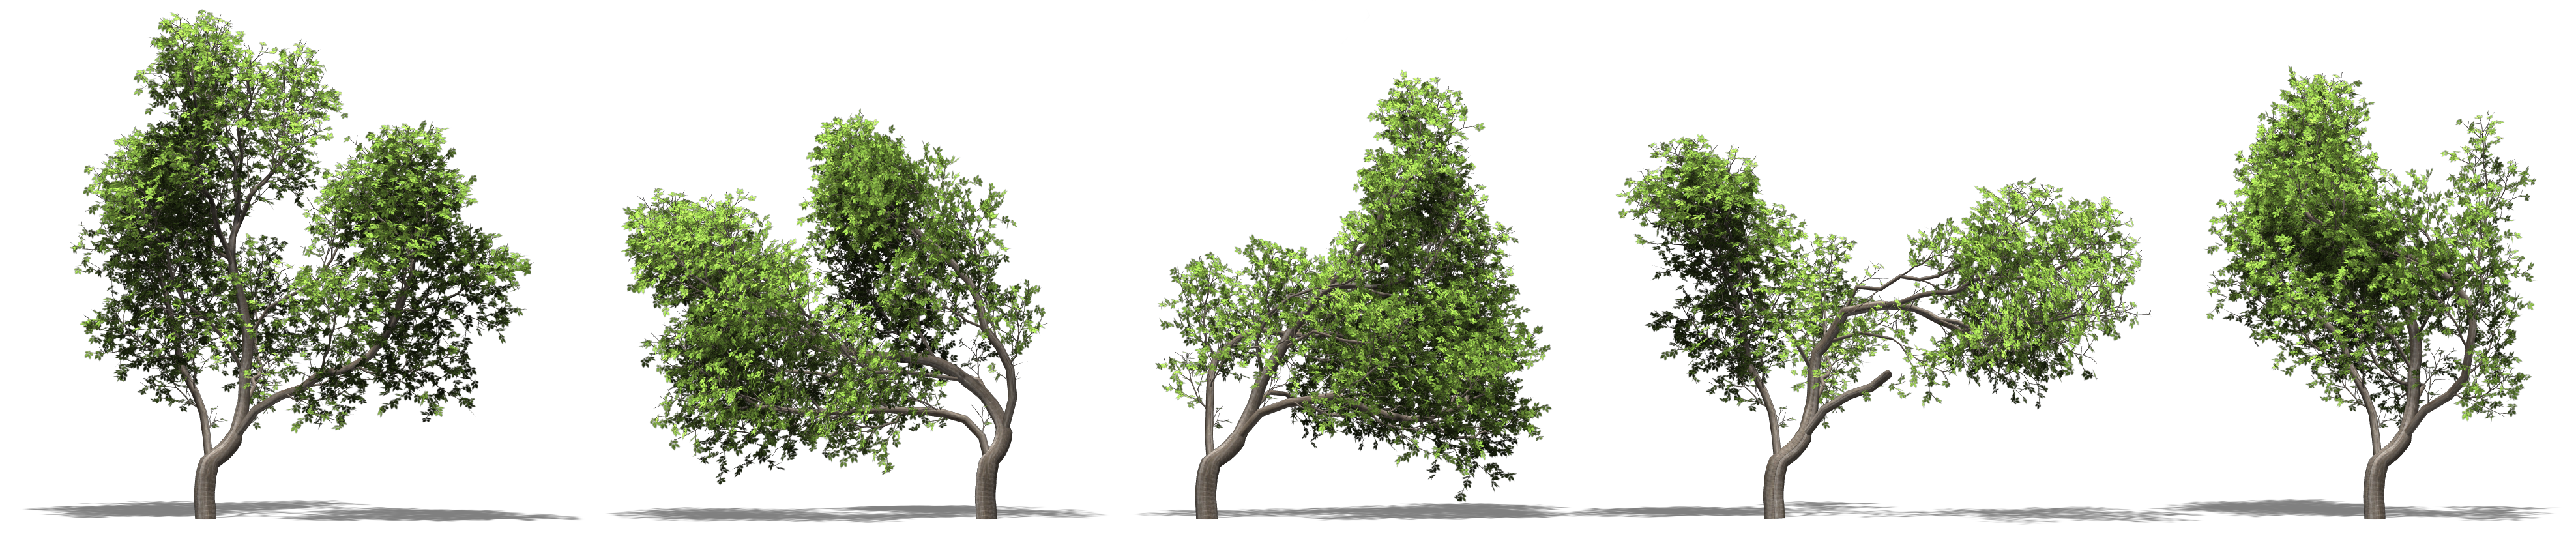 Teaser of Windy Trees: Computing Stress Response for Developmental Tree Models